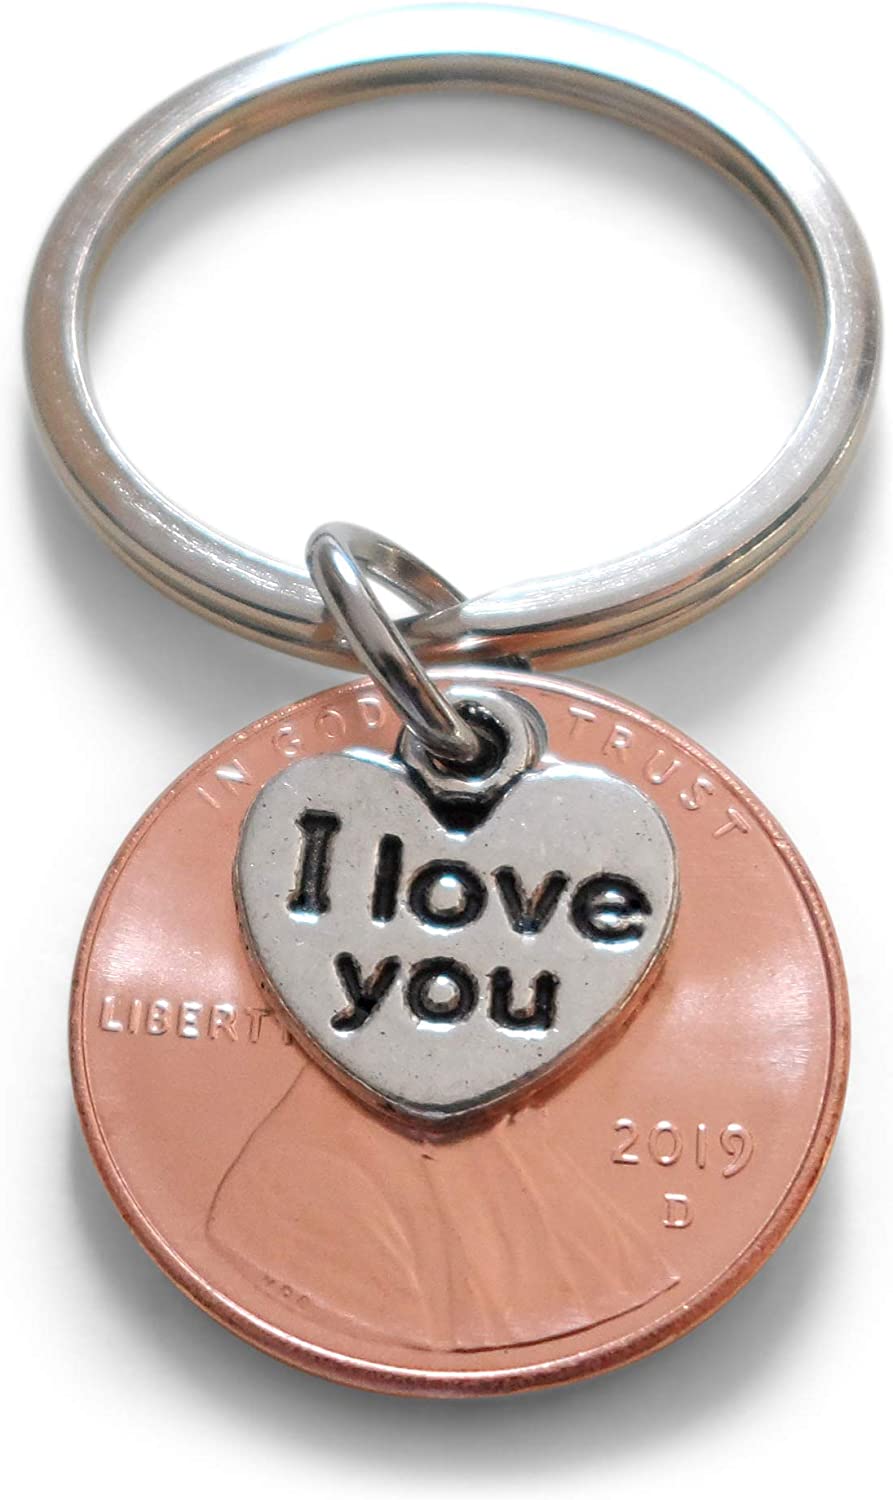 2019 Penny Keychain • w/ "I Love You" Heart Charm 5-Year Anniversary Gift from JewelryEveryday